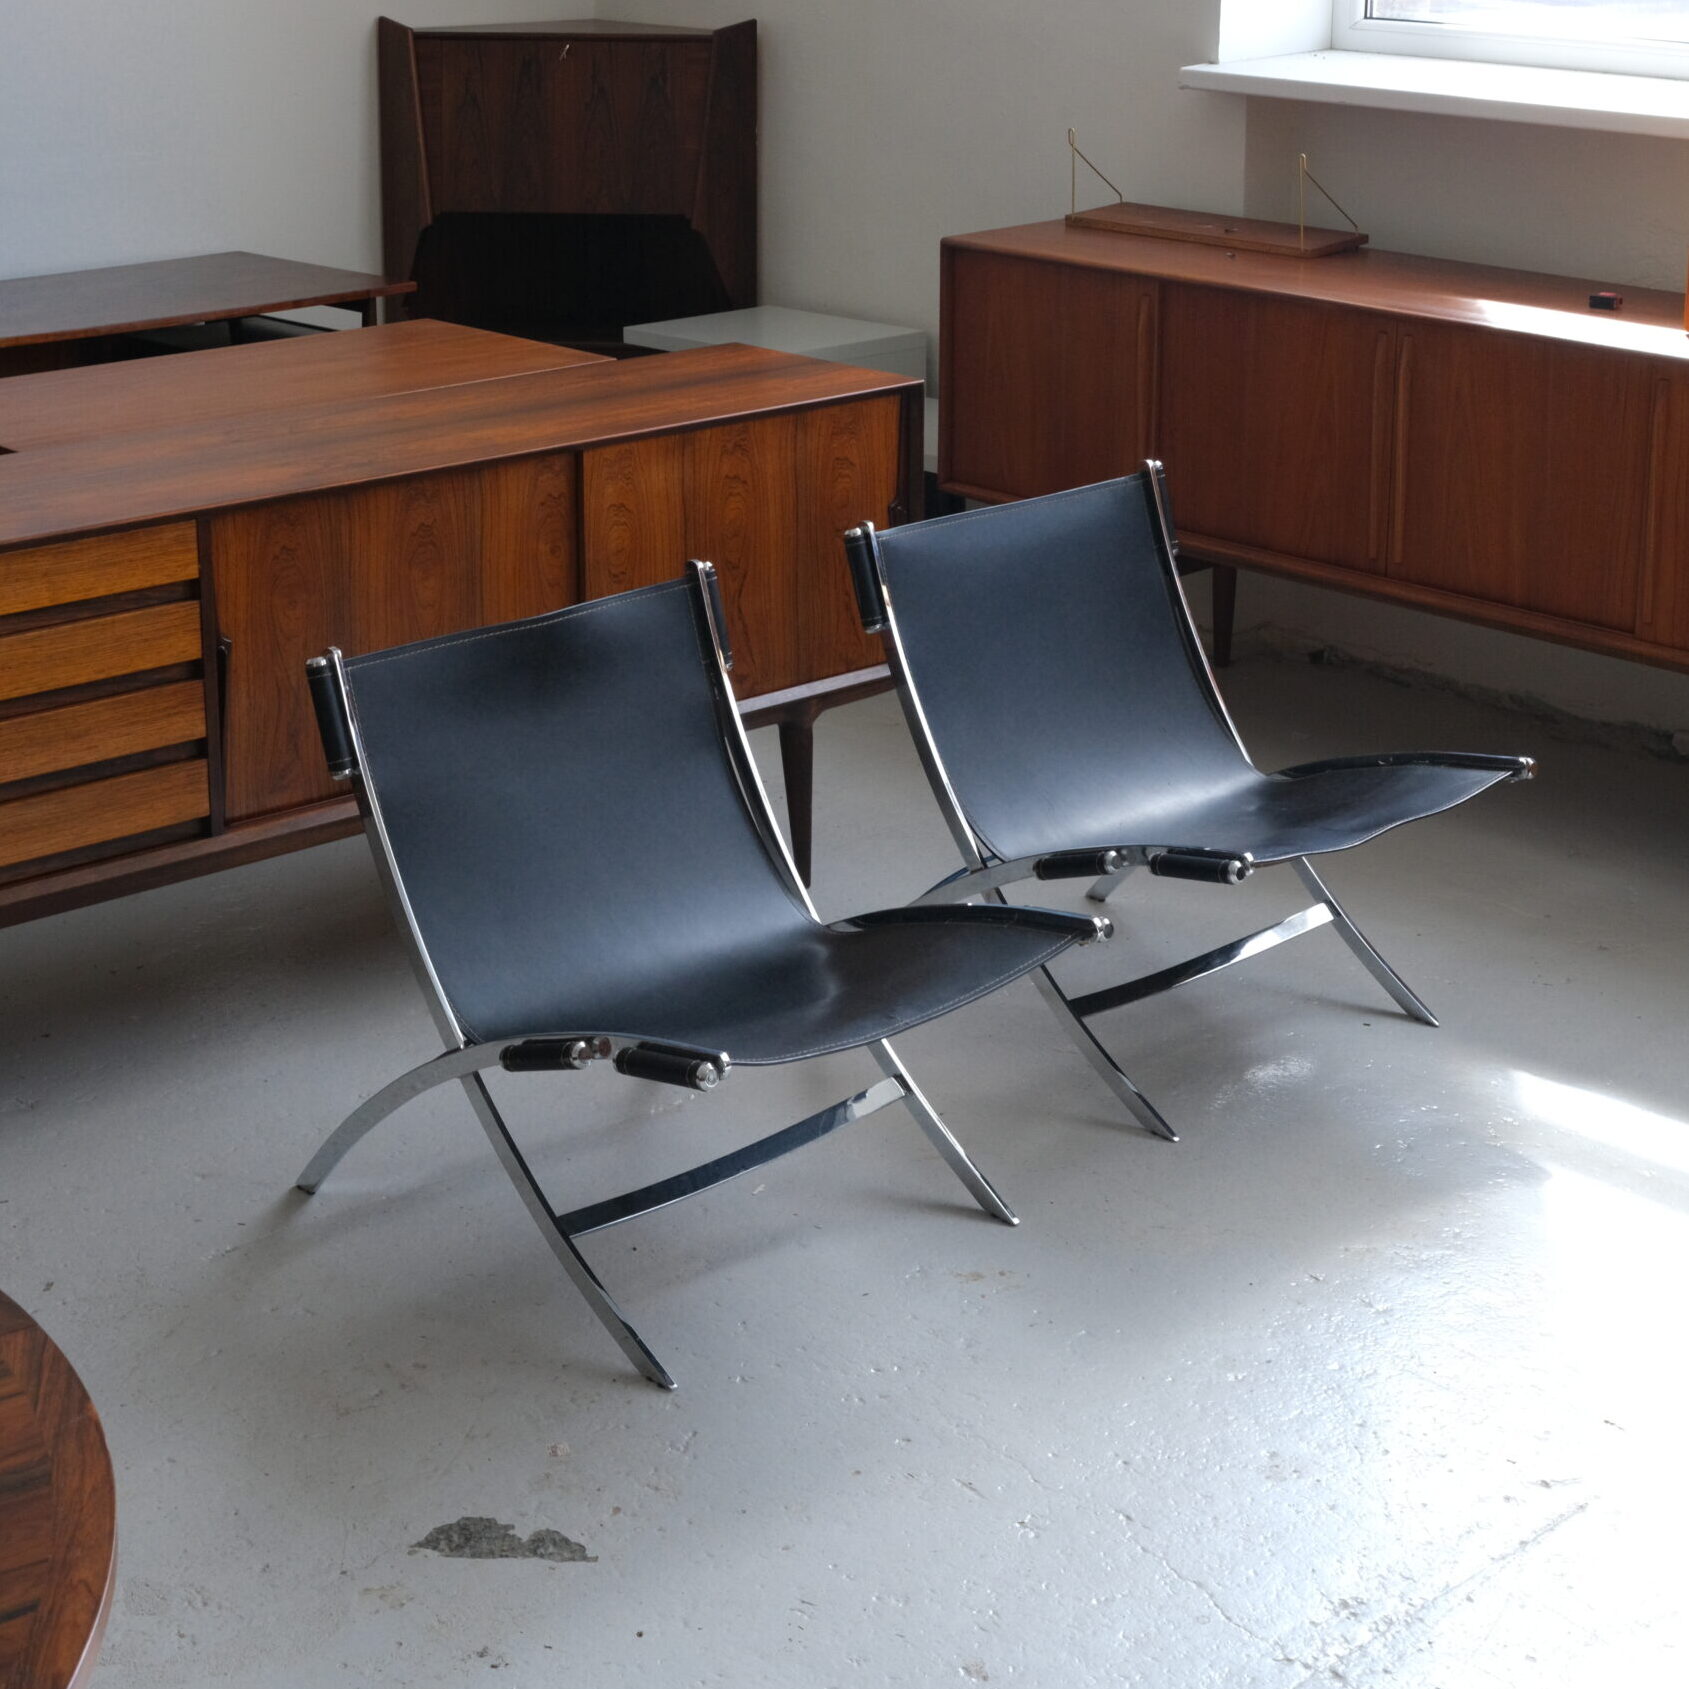 Antonio Citterio Lounge Chair 1980s, Italy – Produced by Flexform or ILVA design